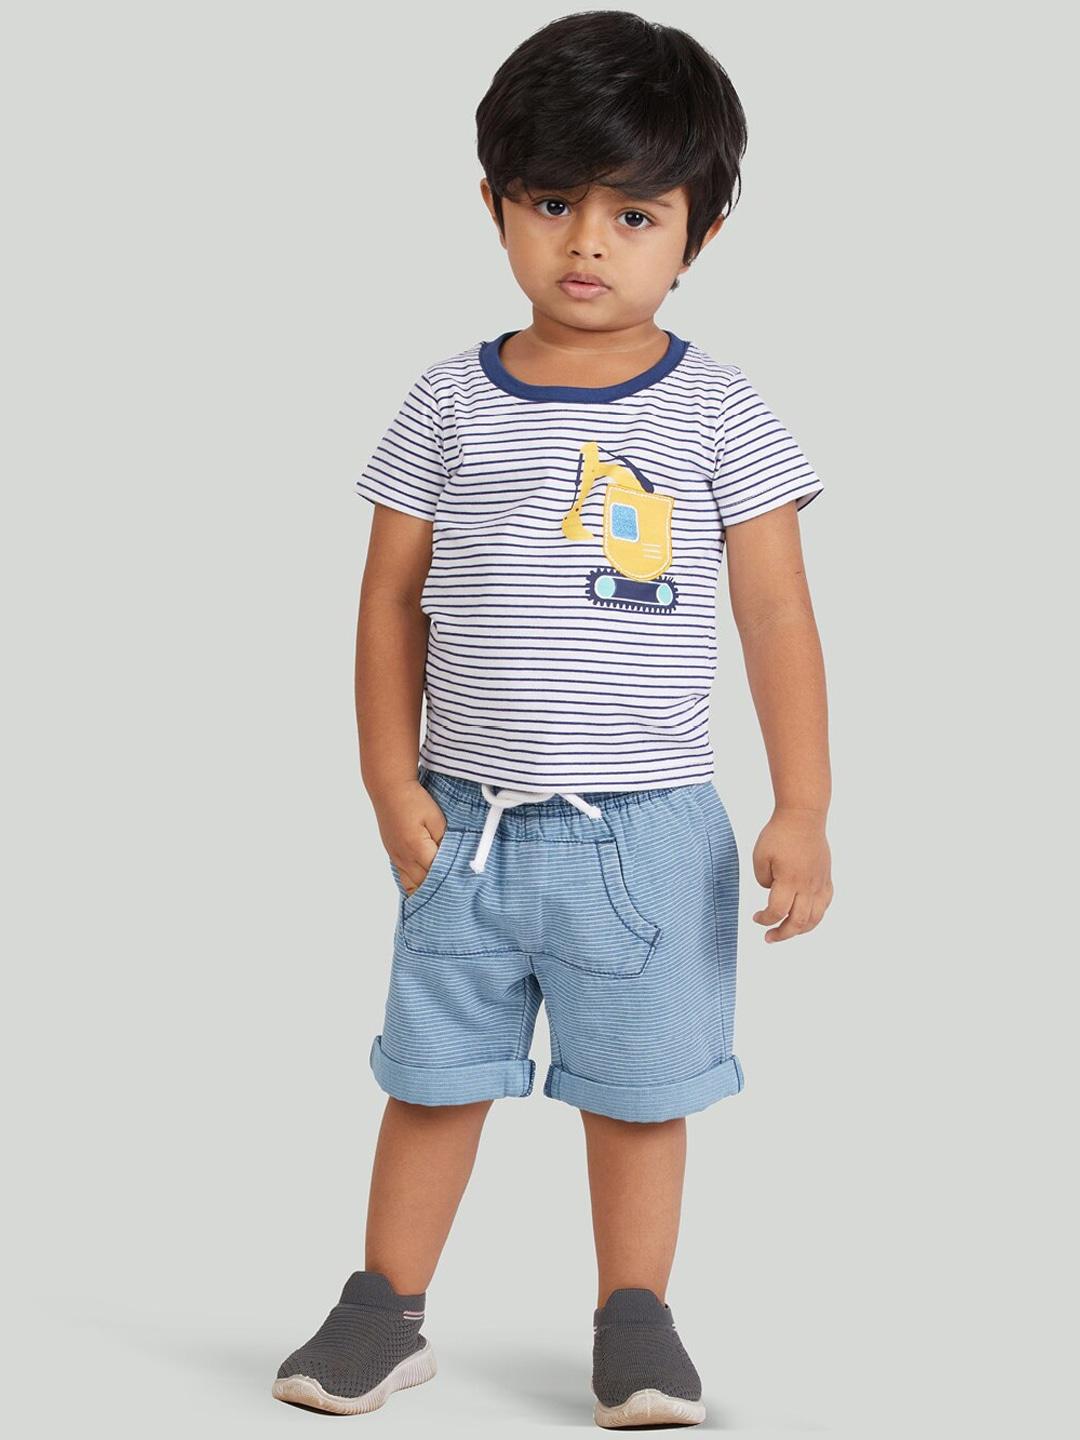 Zalio Boys White & Blue Striped Pure Cotton T-shirt with Denim Shorts